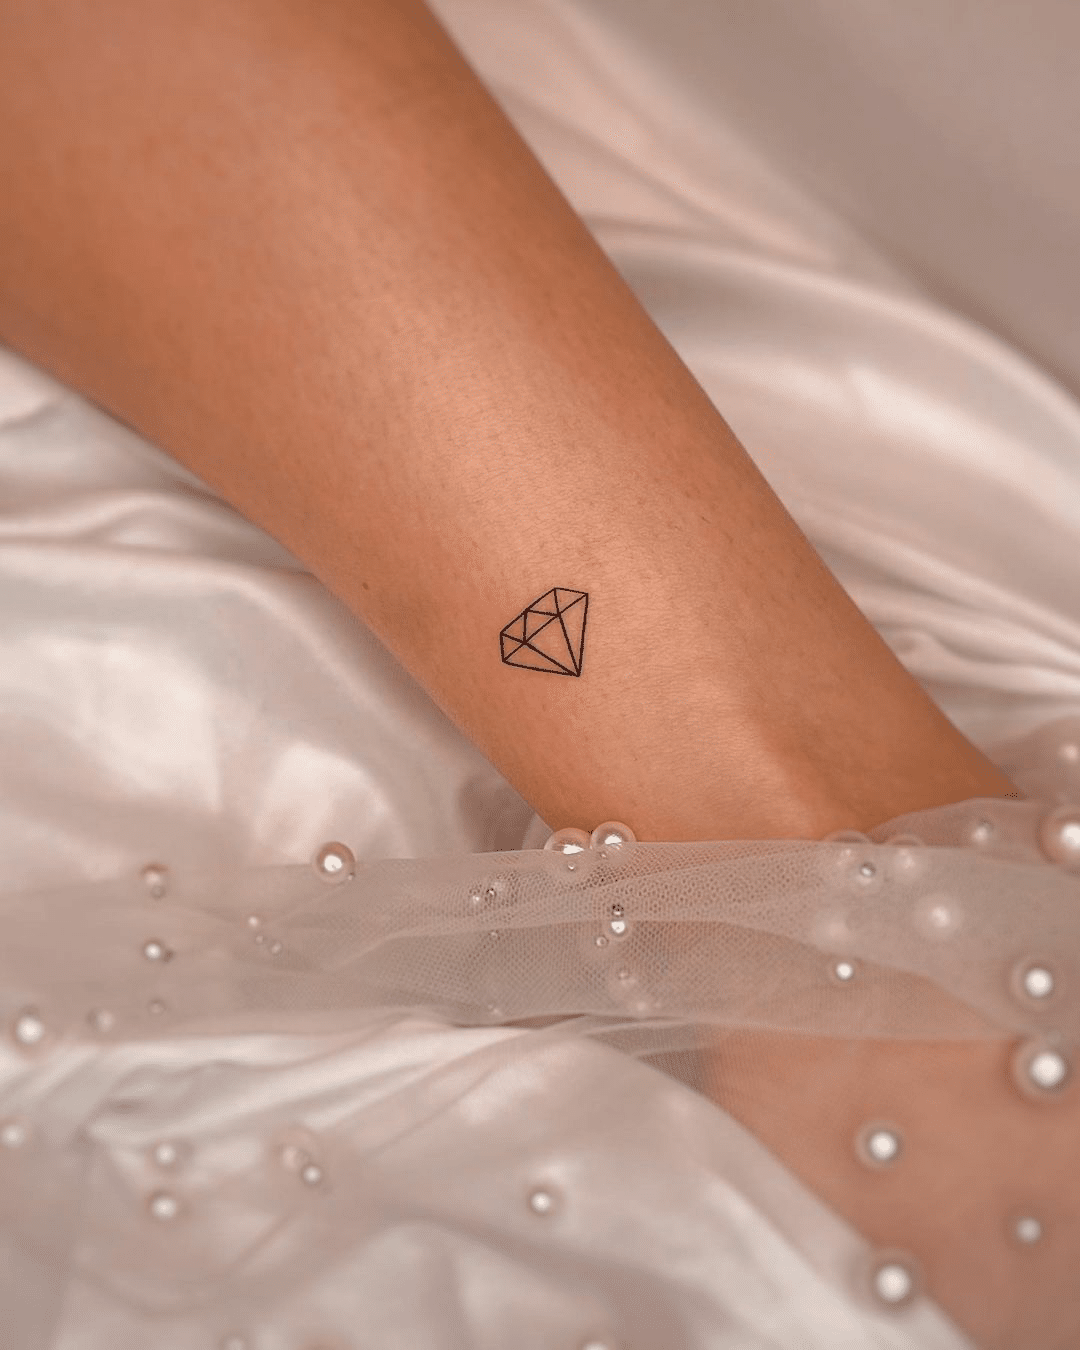 small diamond tattoo design for women